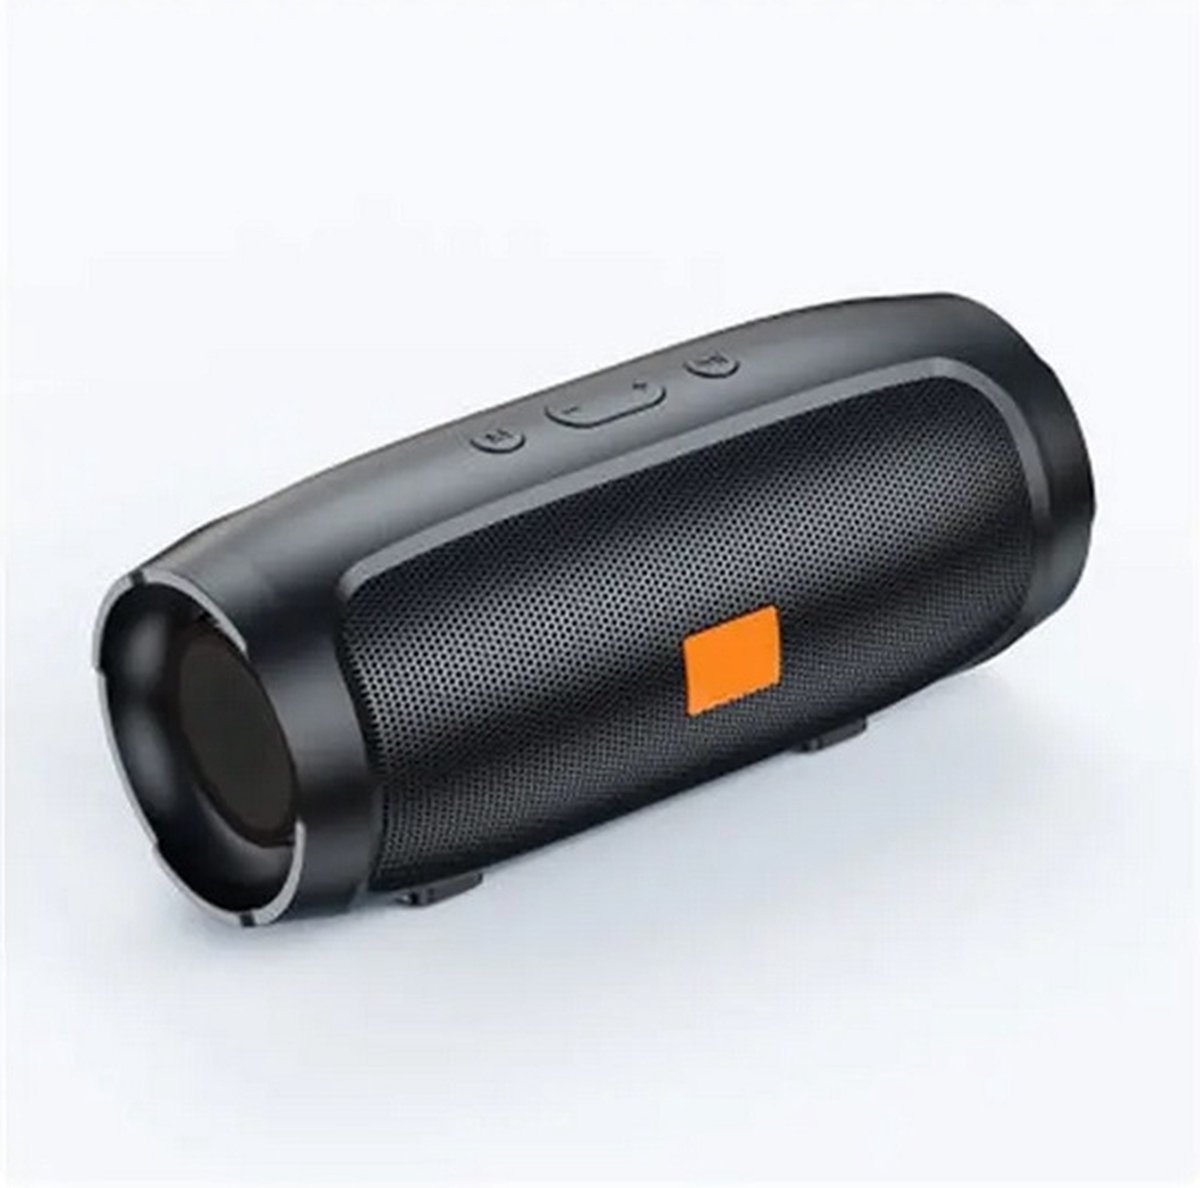 Bluetooth Speaker Dual Speaker Stereo Outdoor Playback Fm Voice Broadcasting Draagbare Subwoofer 50 Draadloze Luidspreker - Zwart